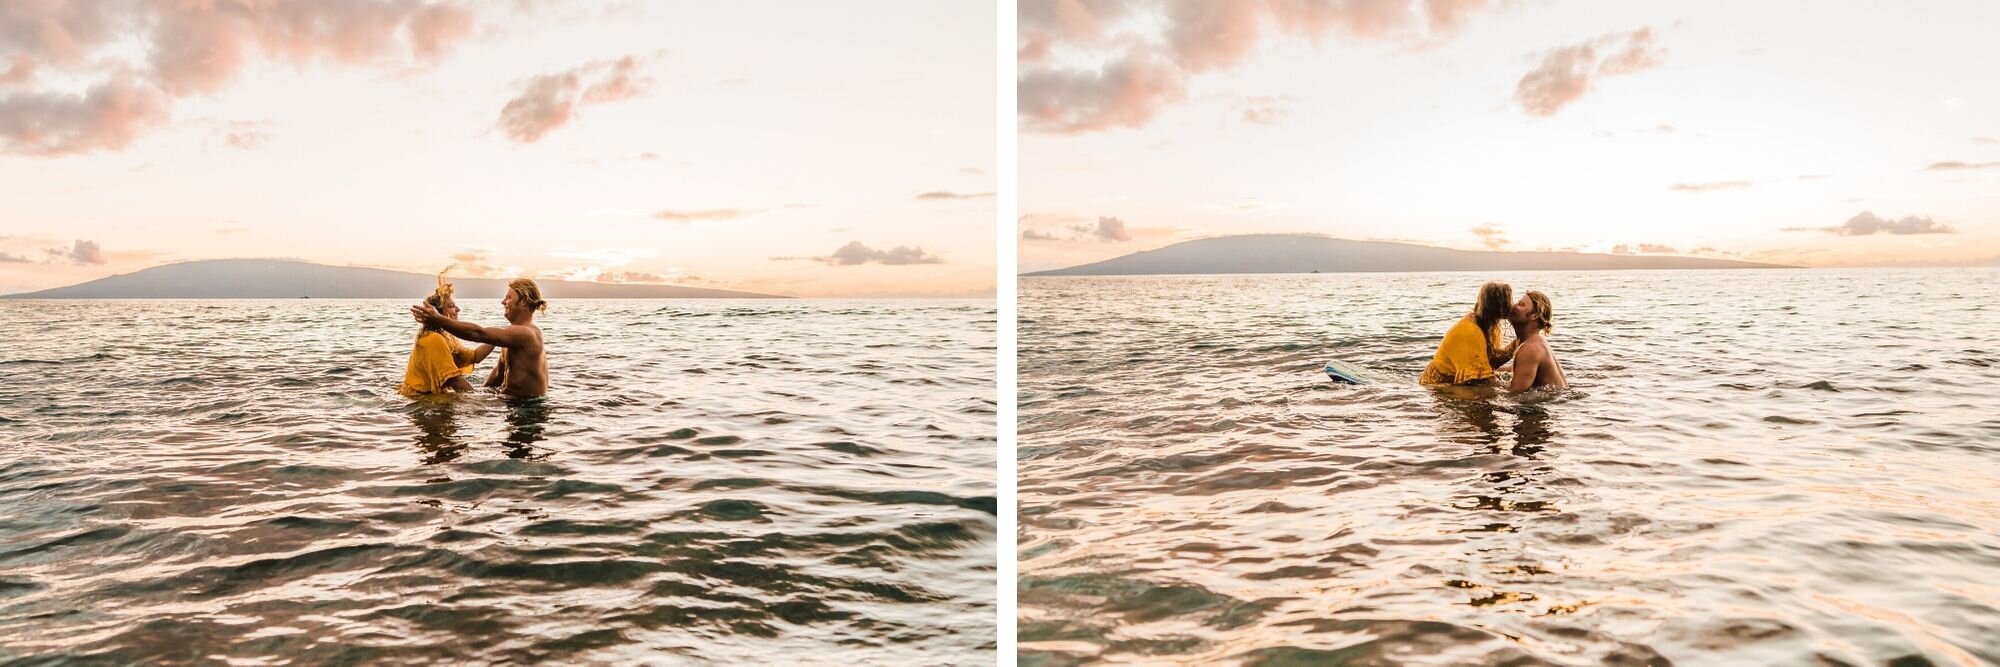 5Maui Engagement Photographer: Haleakala Sunrise to Beach Sunset | Between the Pine Adventure Elopement Photographer3.jpg